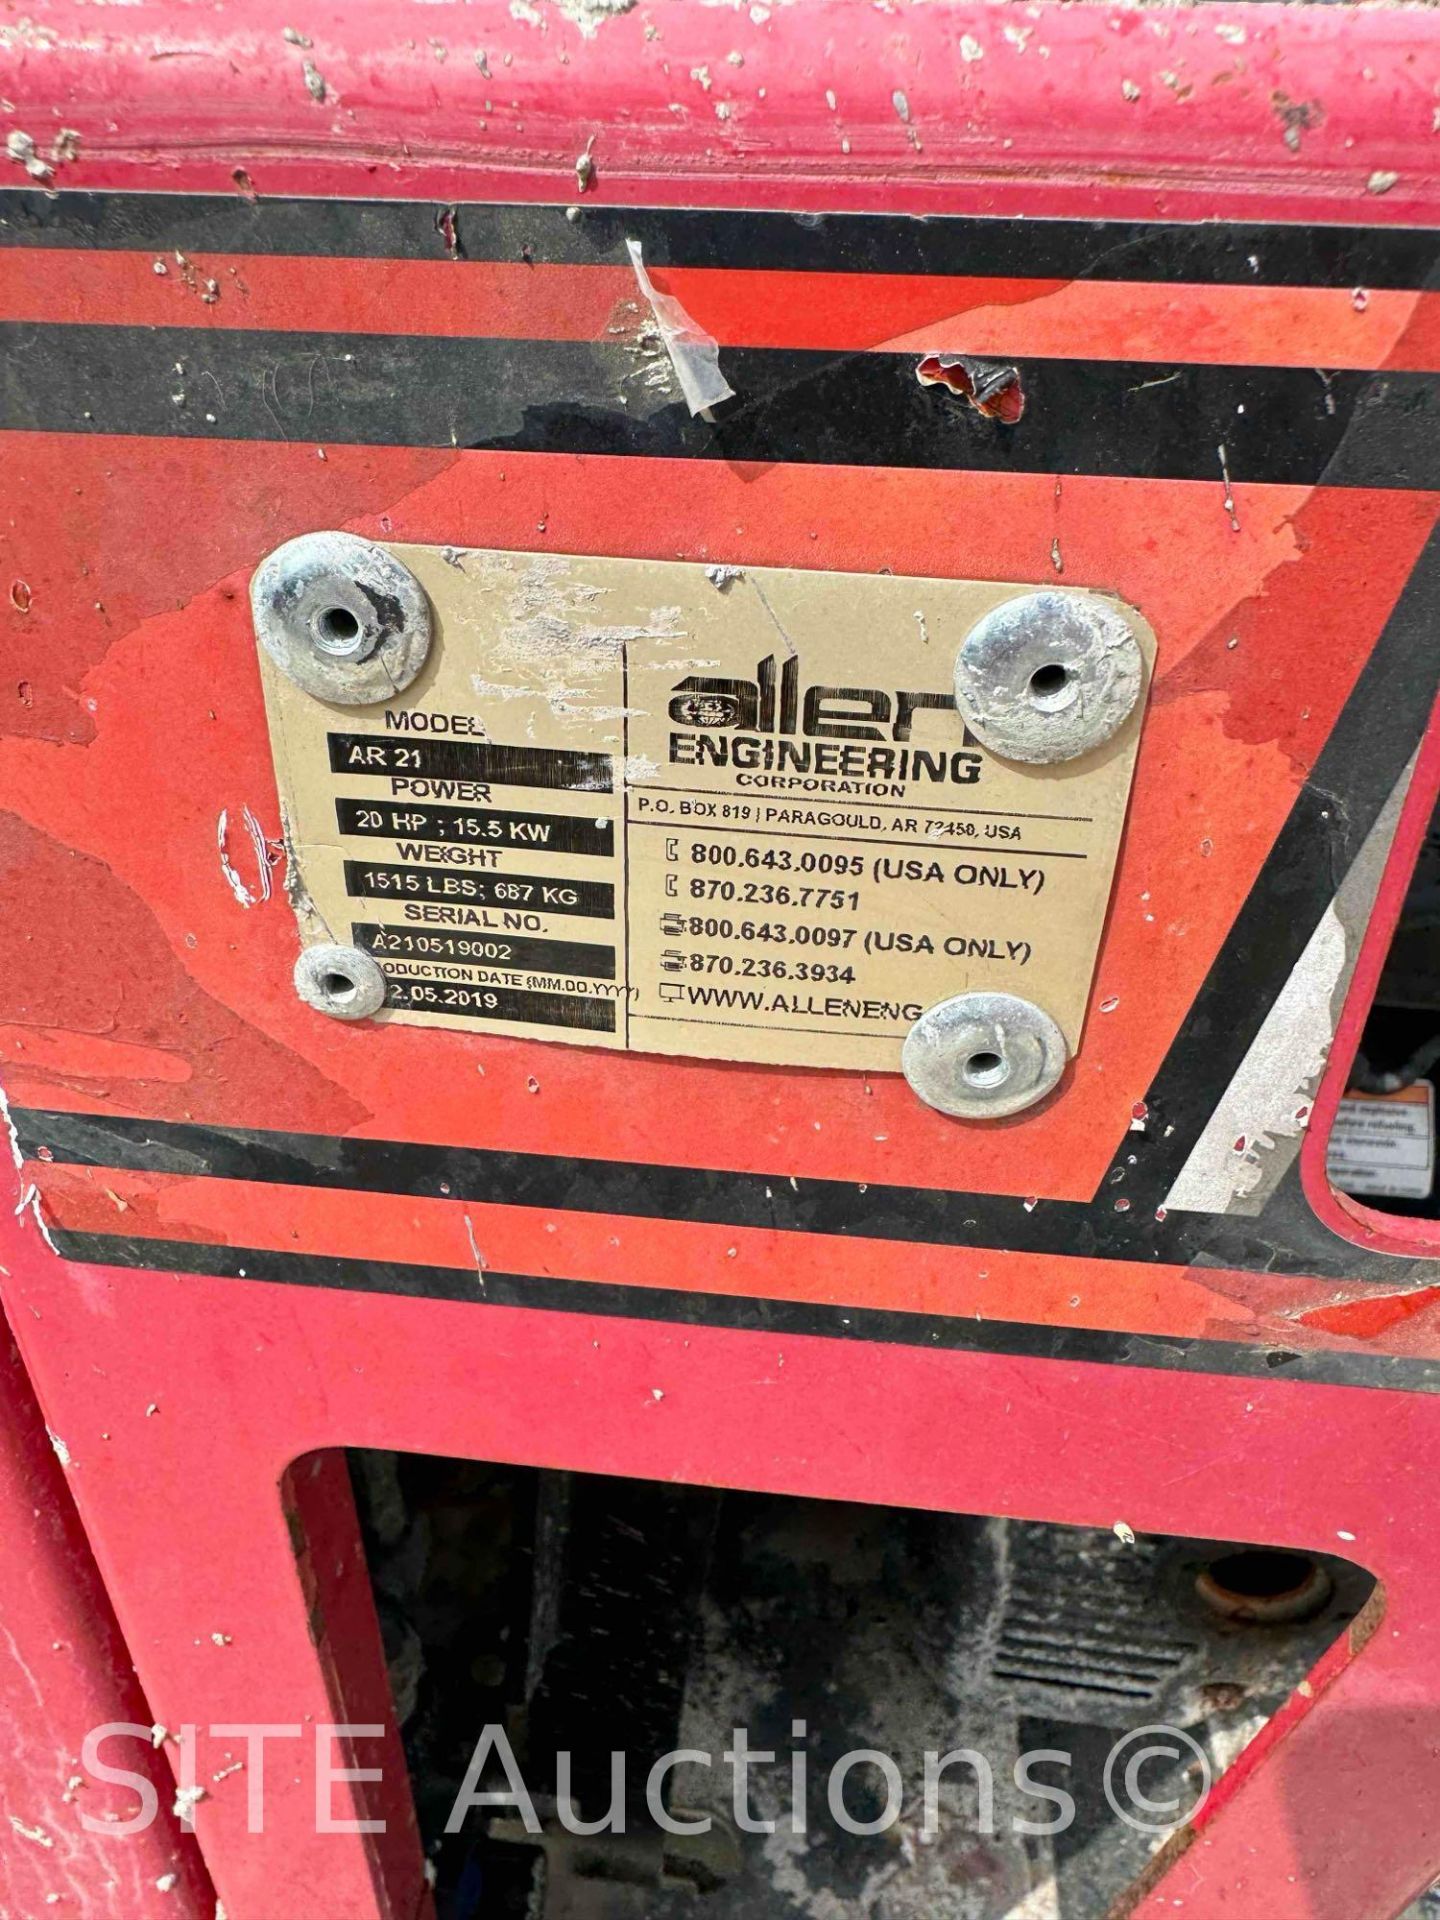 2019 Allen AR21 Concrete Buggy - Image 9 of 17